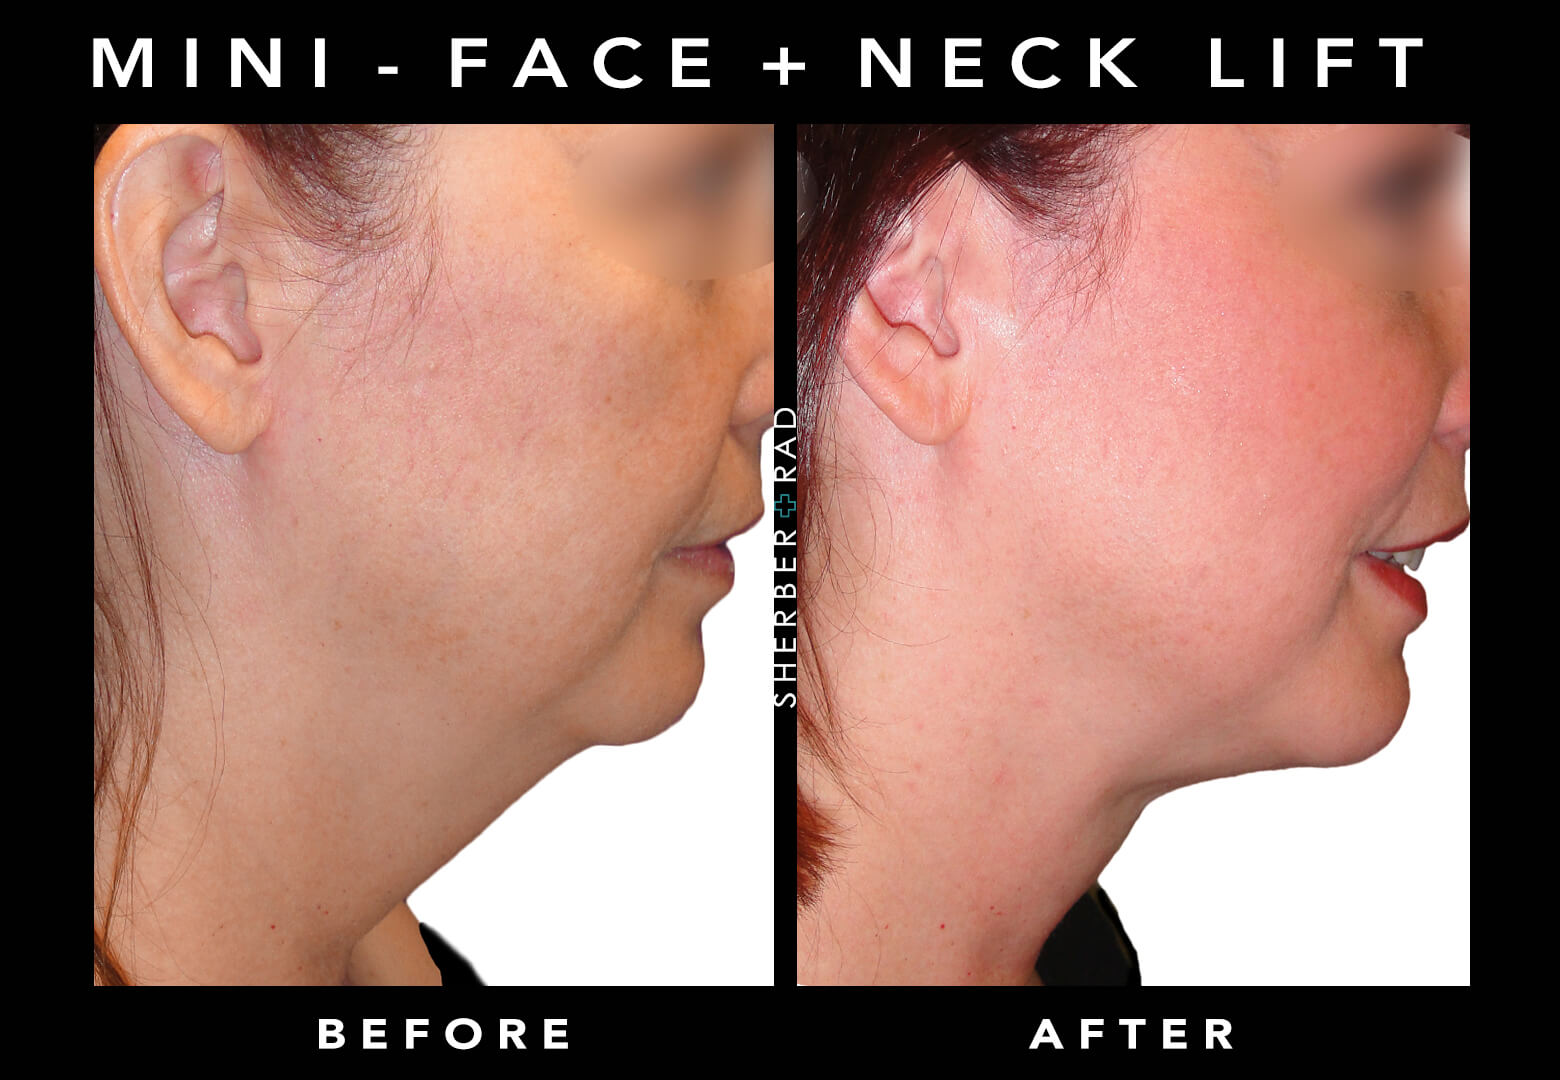 Mini-Face Lift Patient Before & After Procedure